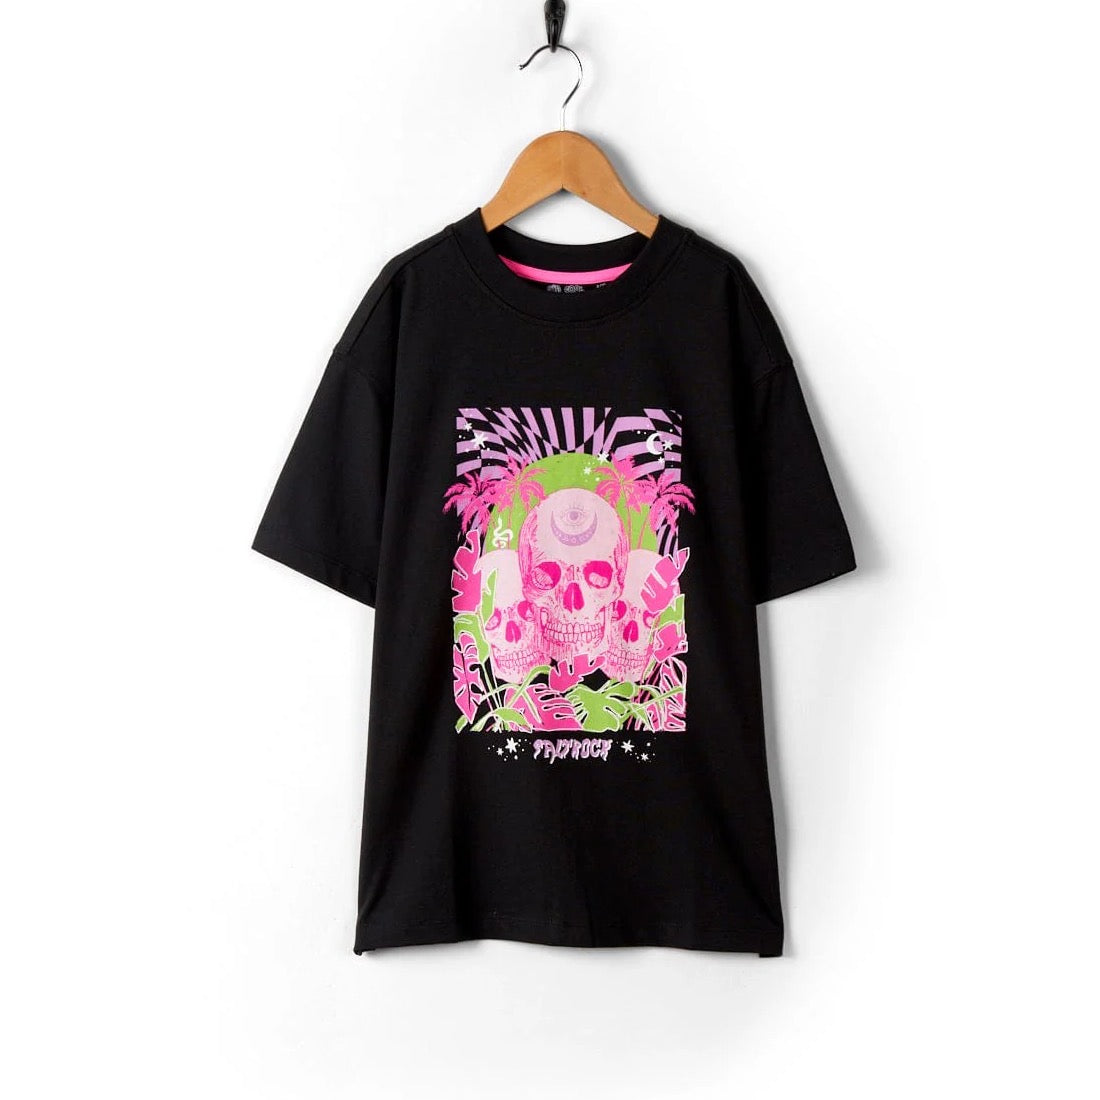 Saltrock Girls Mystic Skulls T-Shirt Clothing 9/10YRS / Black,11/12YRS / Black,13YRS / Black